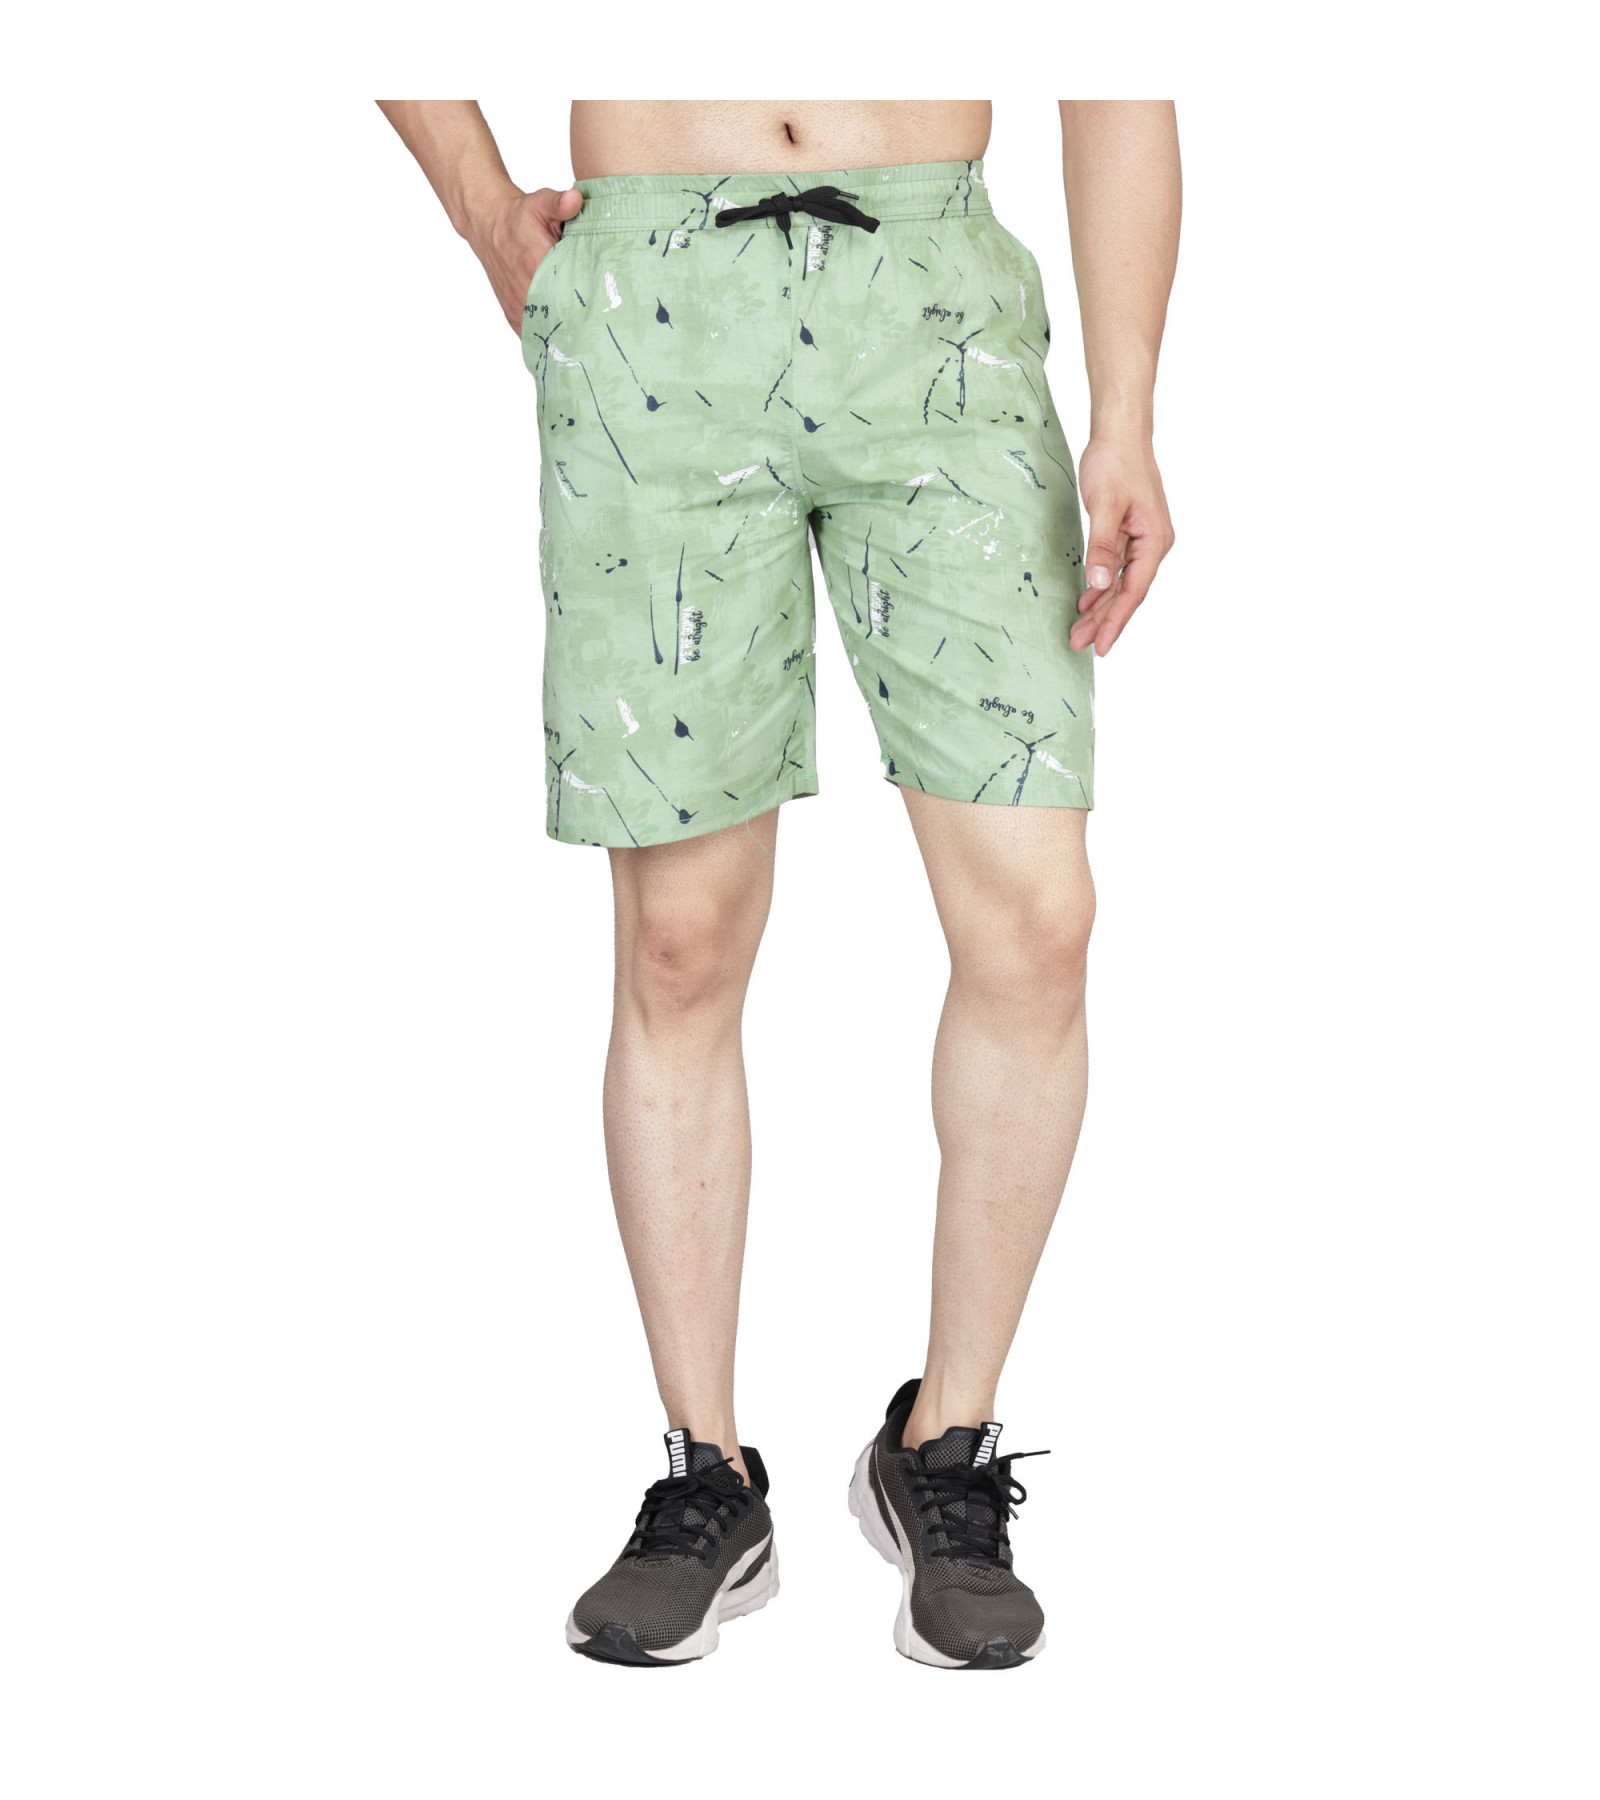 Abaranji Stylish Unique Printed Men's Half shorts